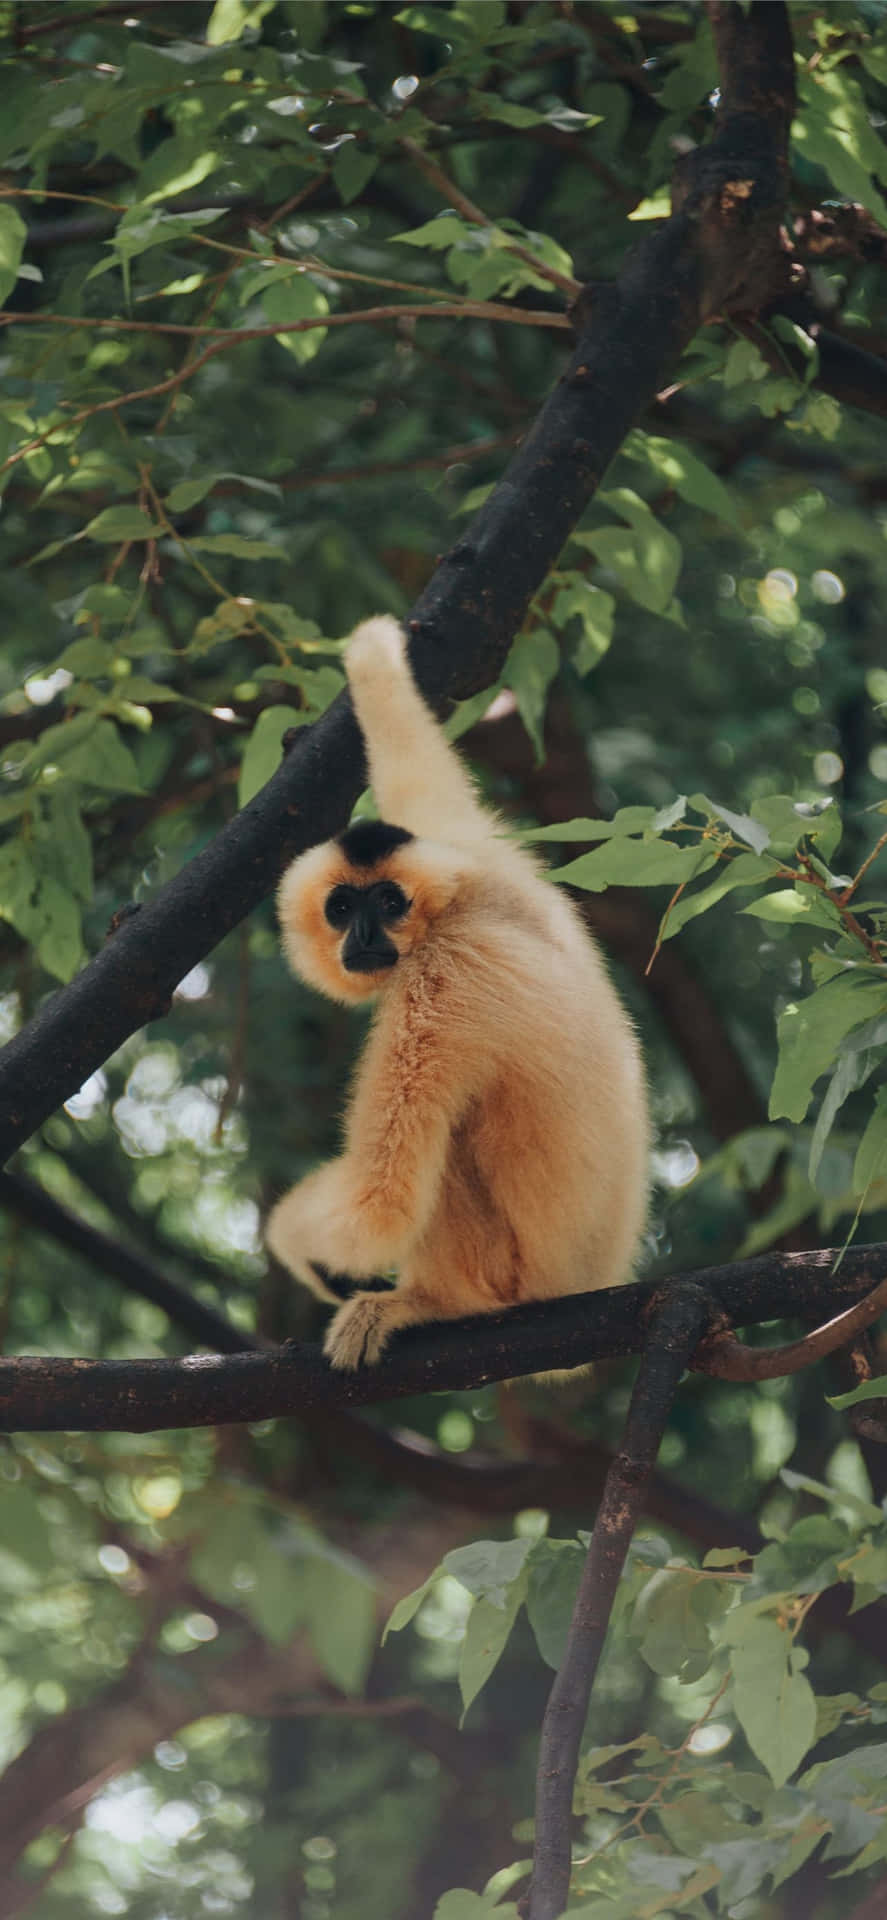 Iphonexs Bakgrund Med Gibbon På Trädet.